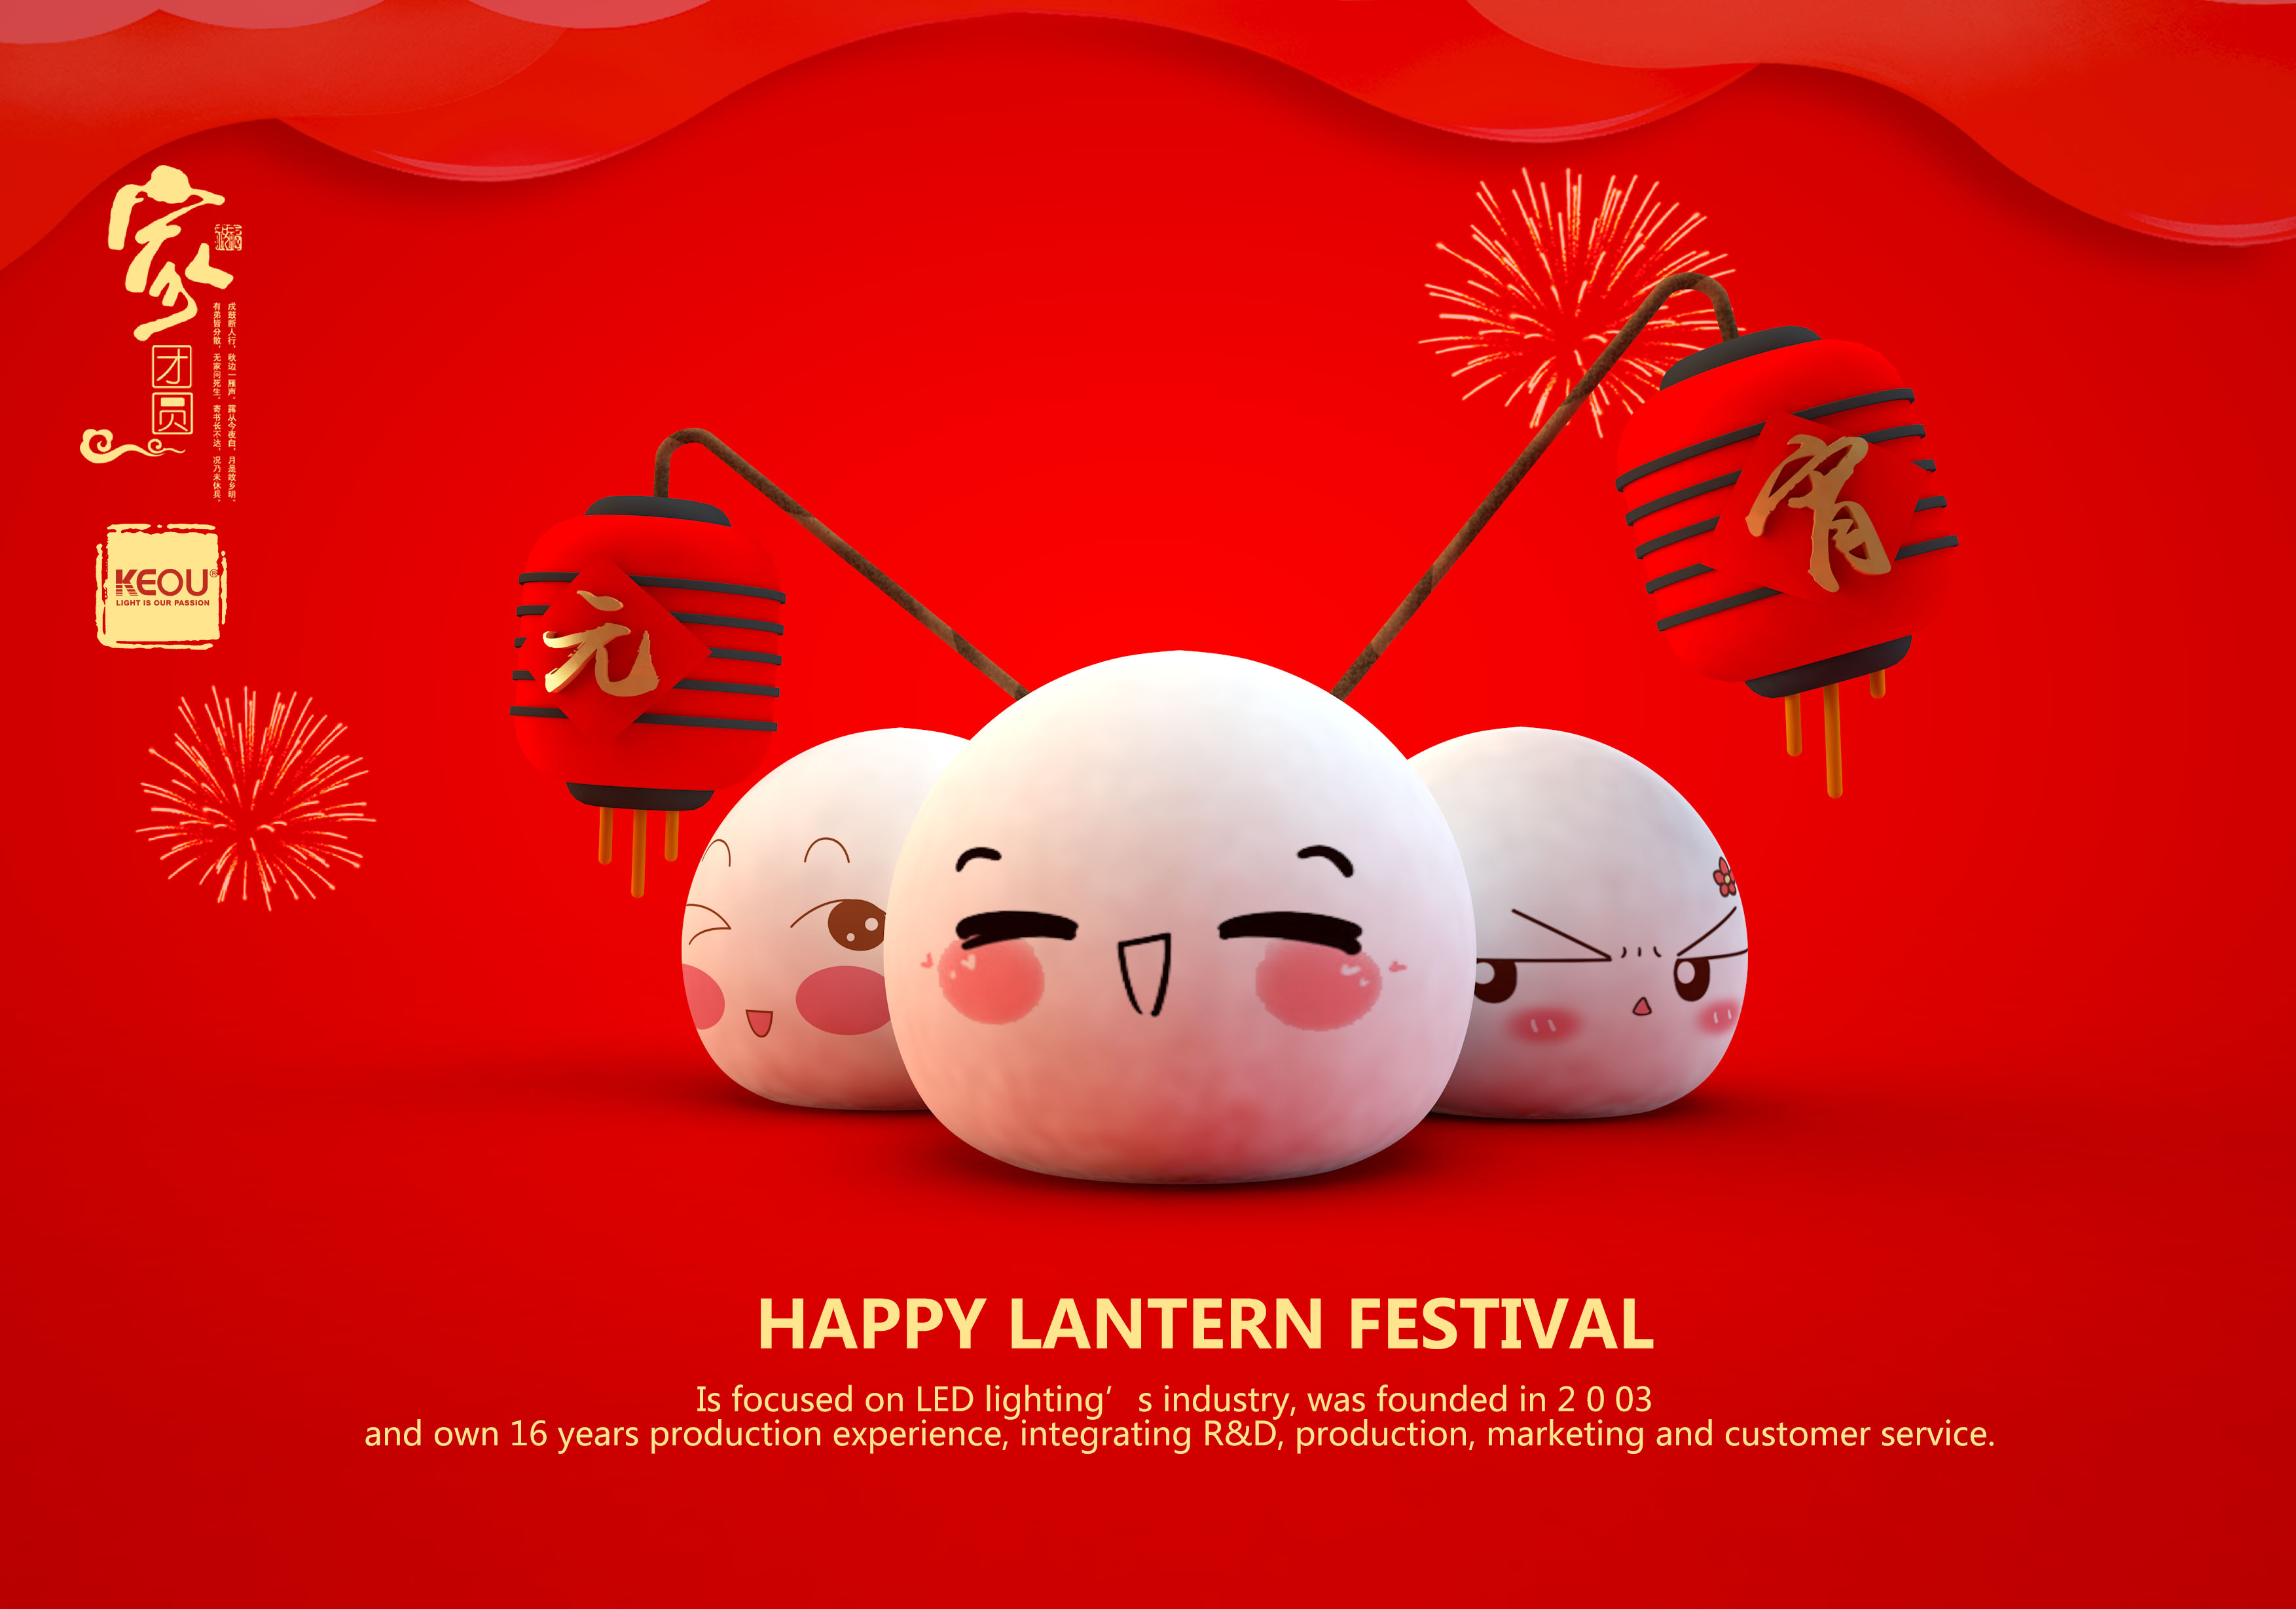 Solar light factory KEOU member wish all of you Happy Lantern Festival